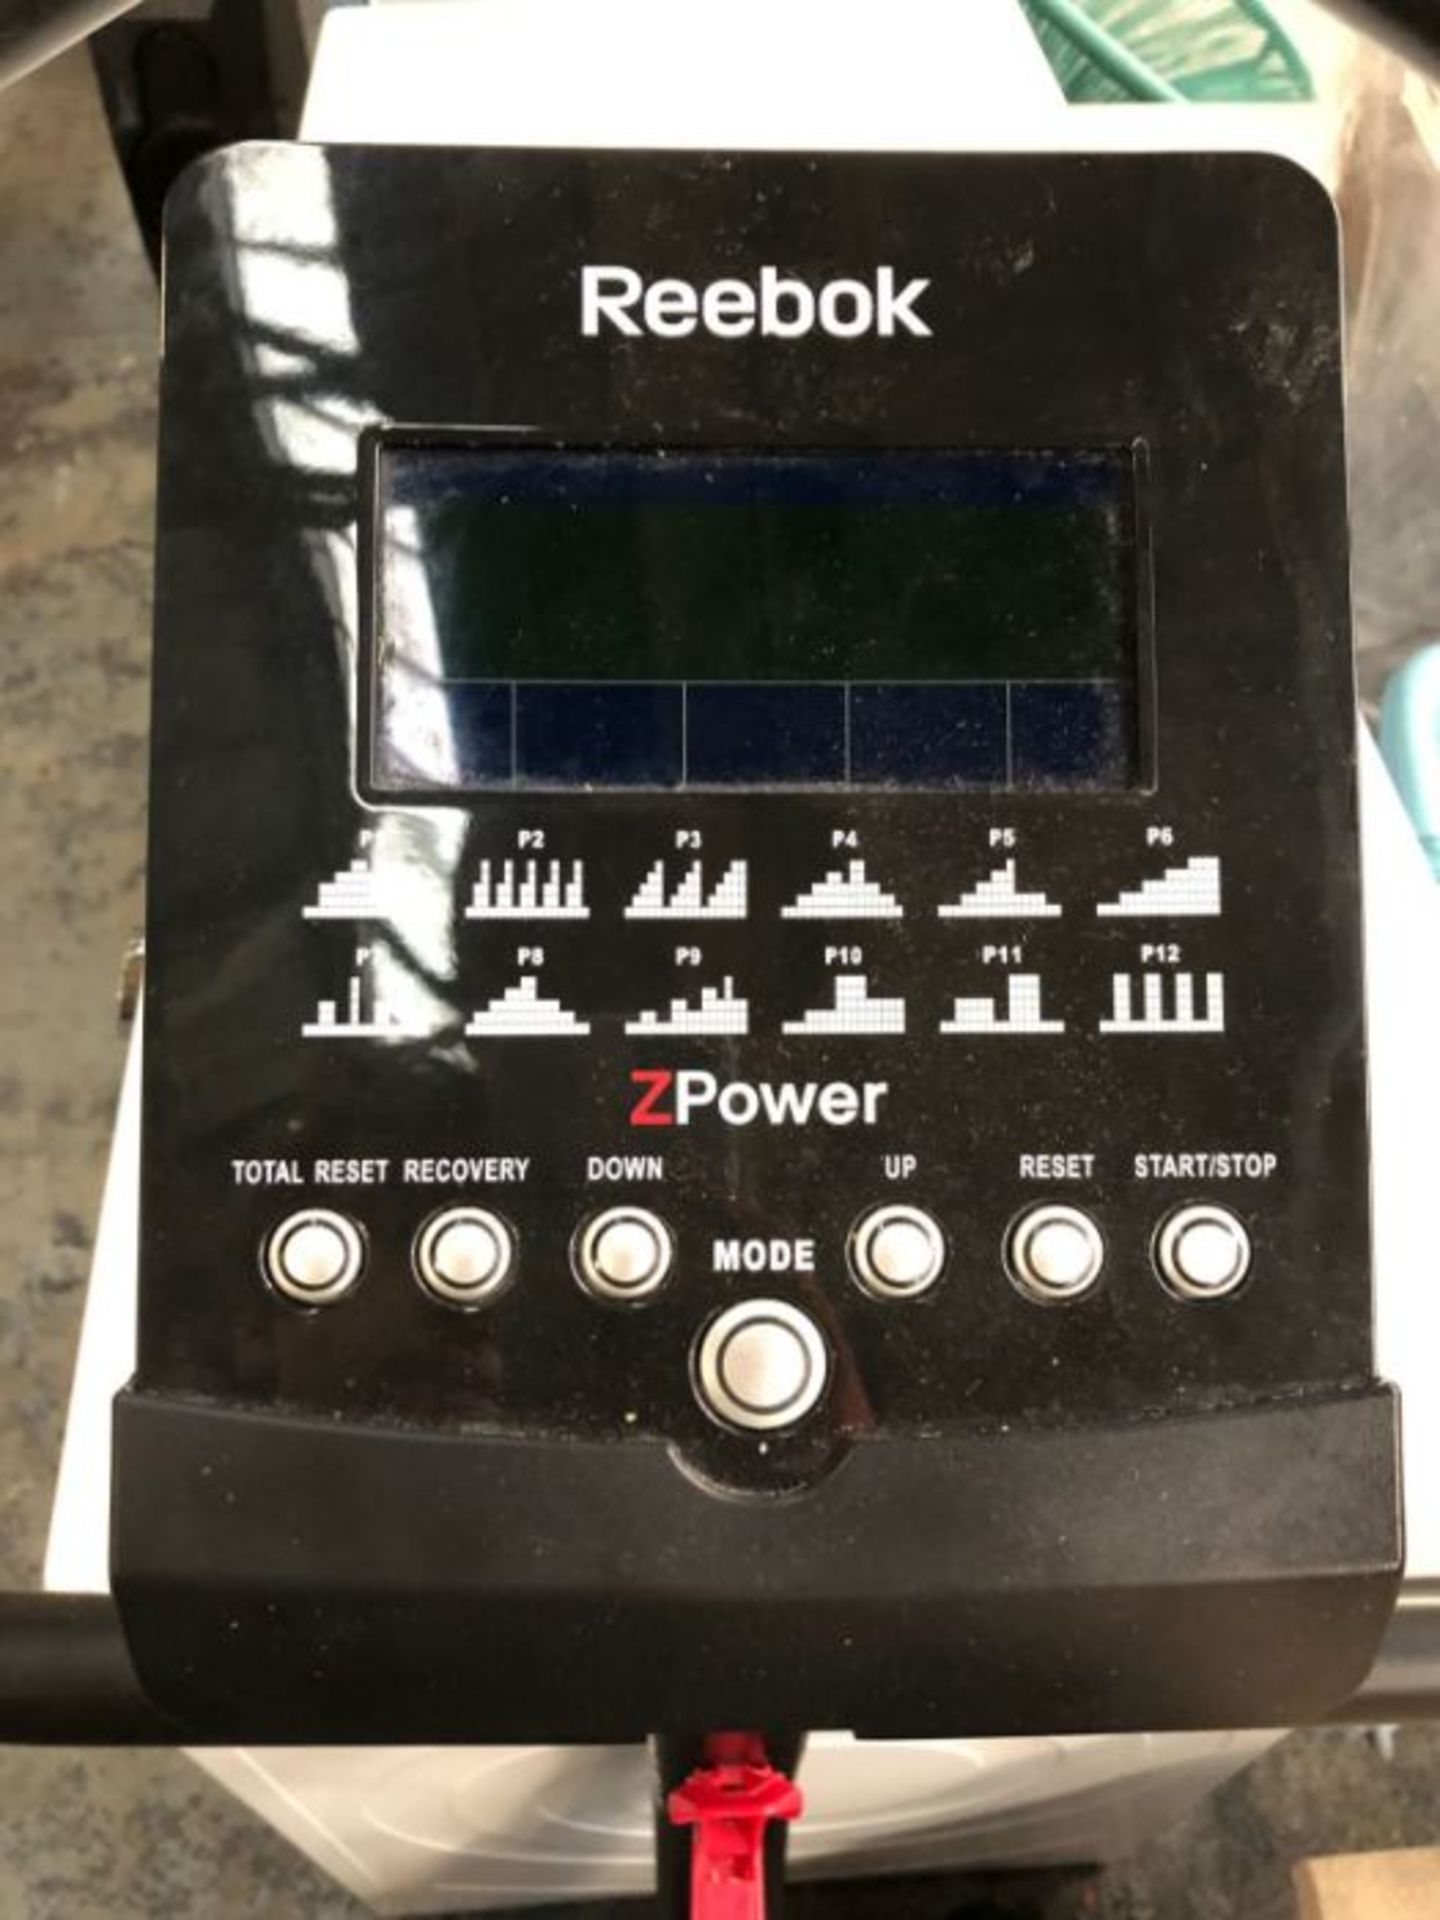 REEBOK Z-POWER EXERCISE BIKE, BLACK - Image 2 of 2